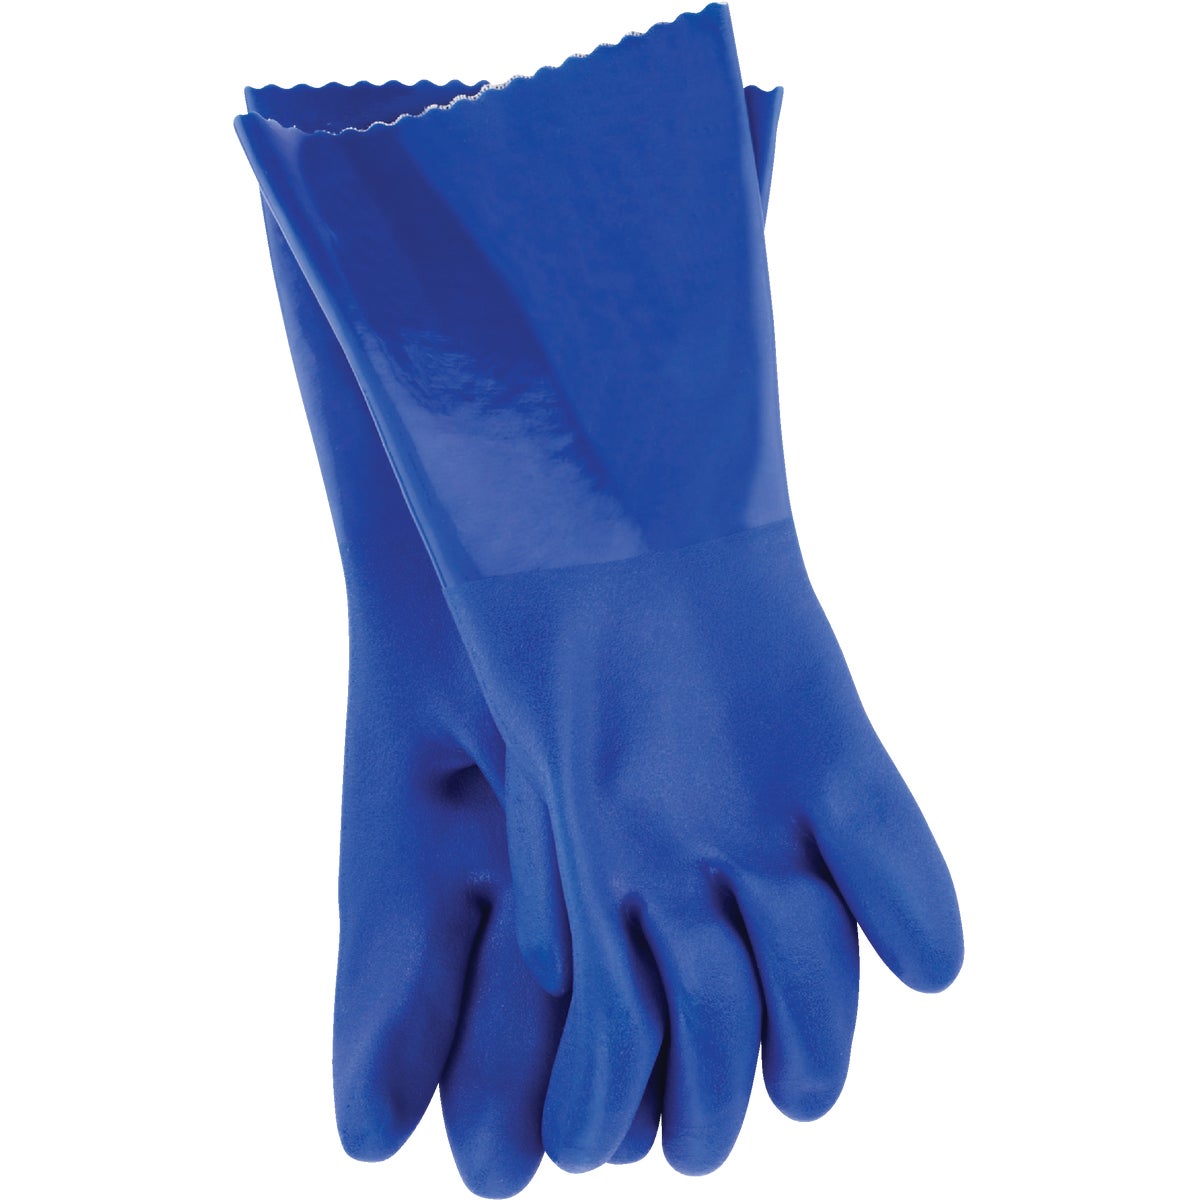 Working Hands Medium PVC Coated Rubber Glove